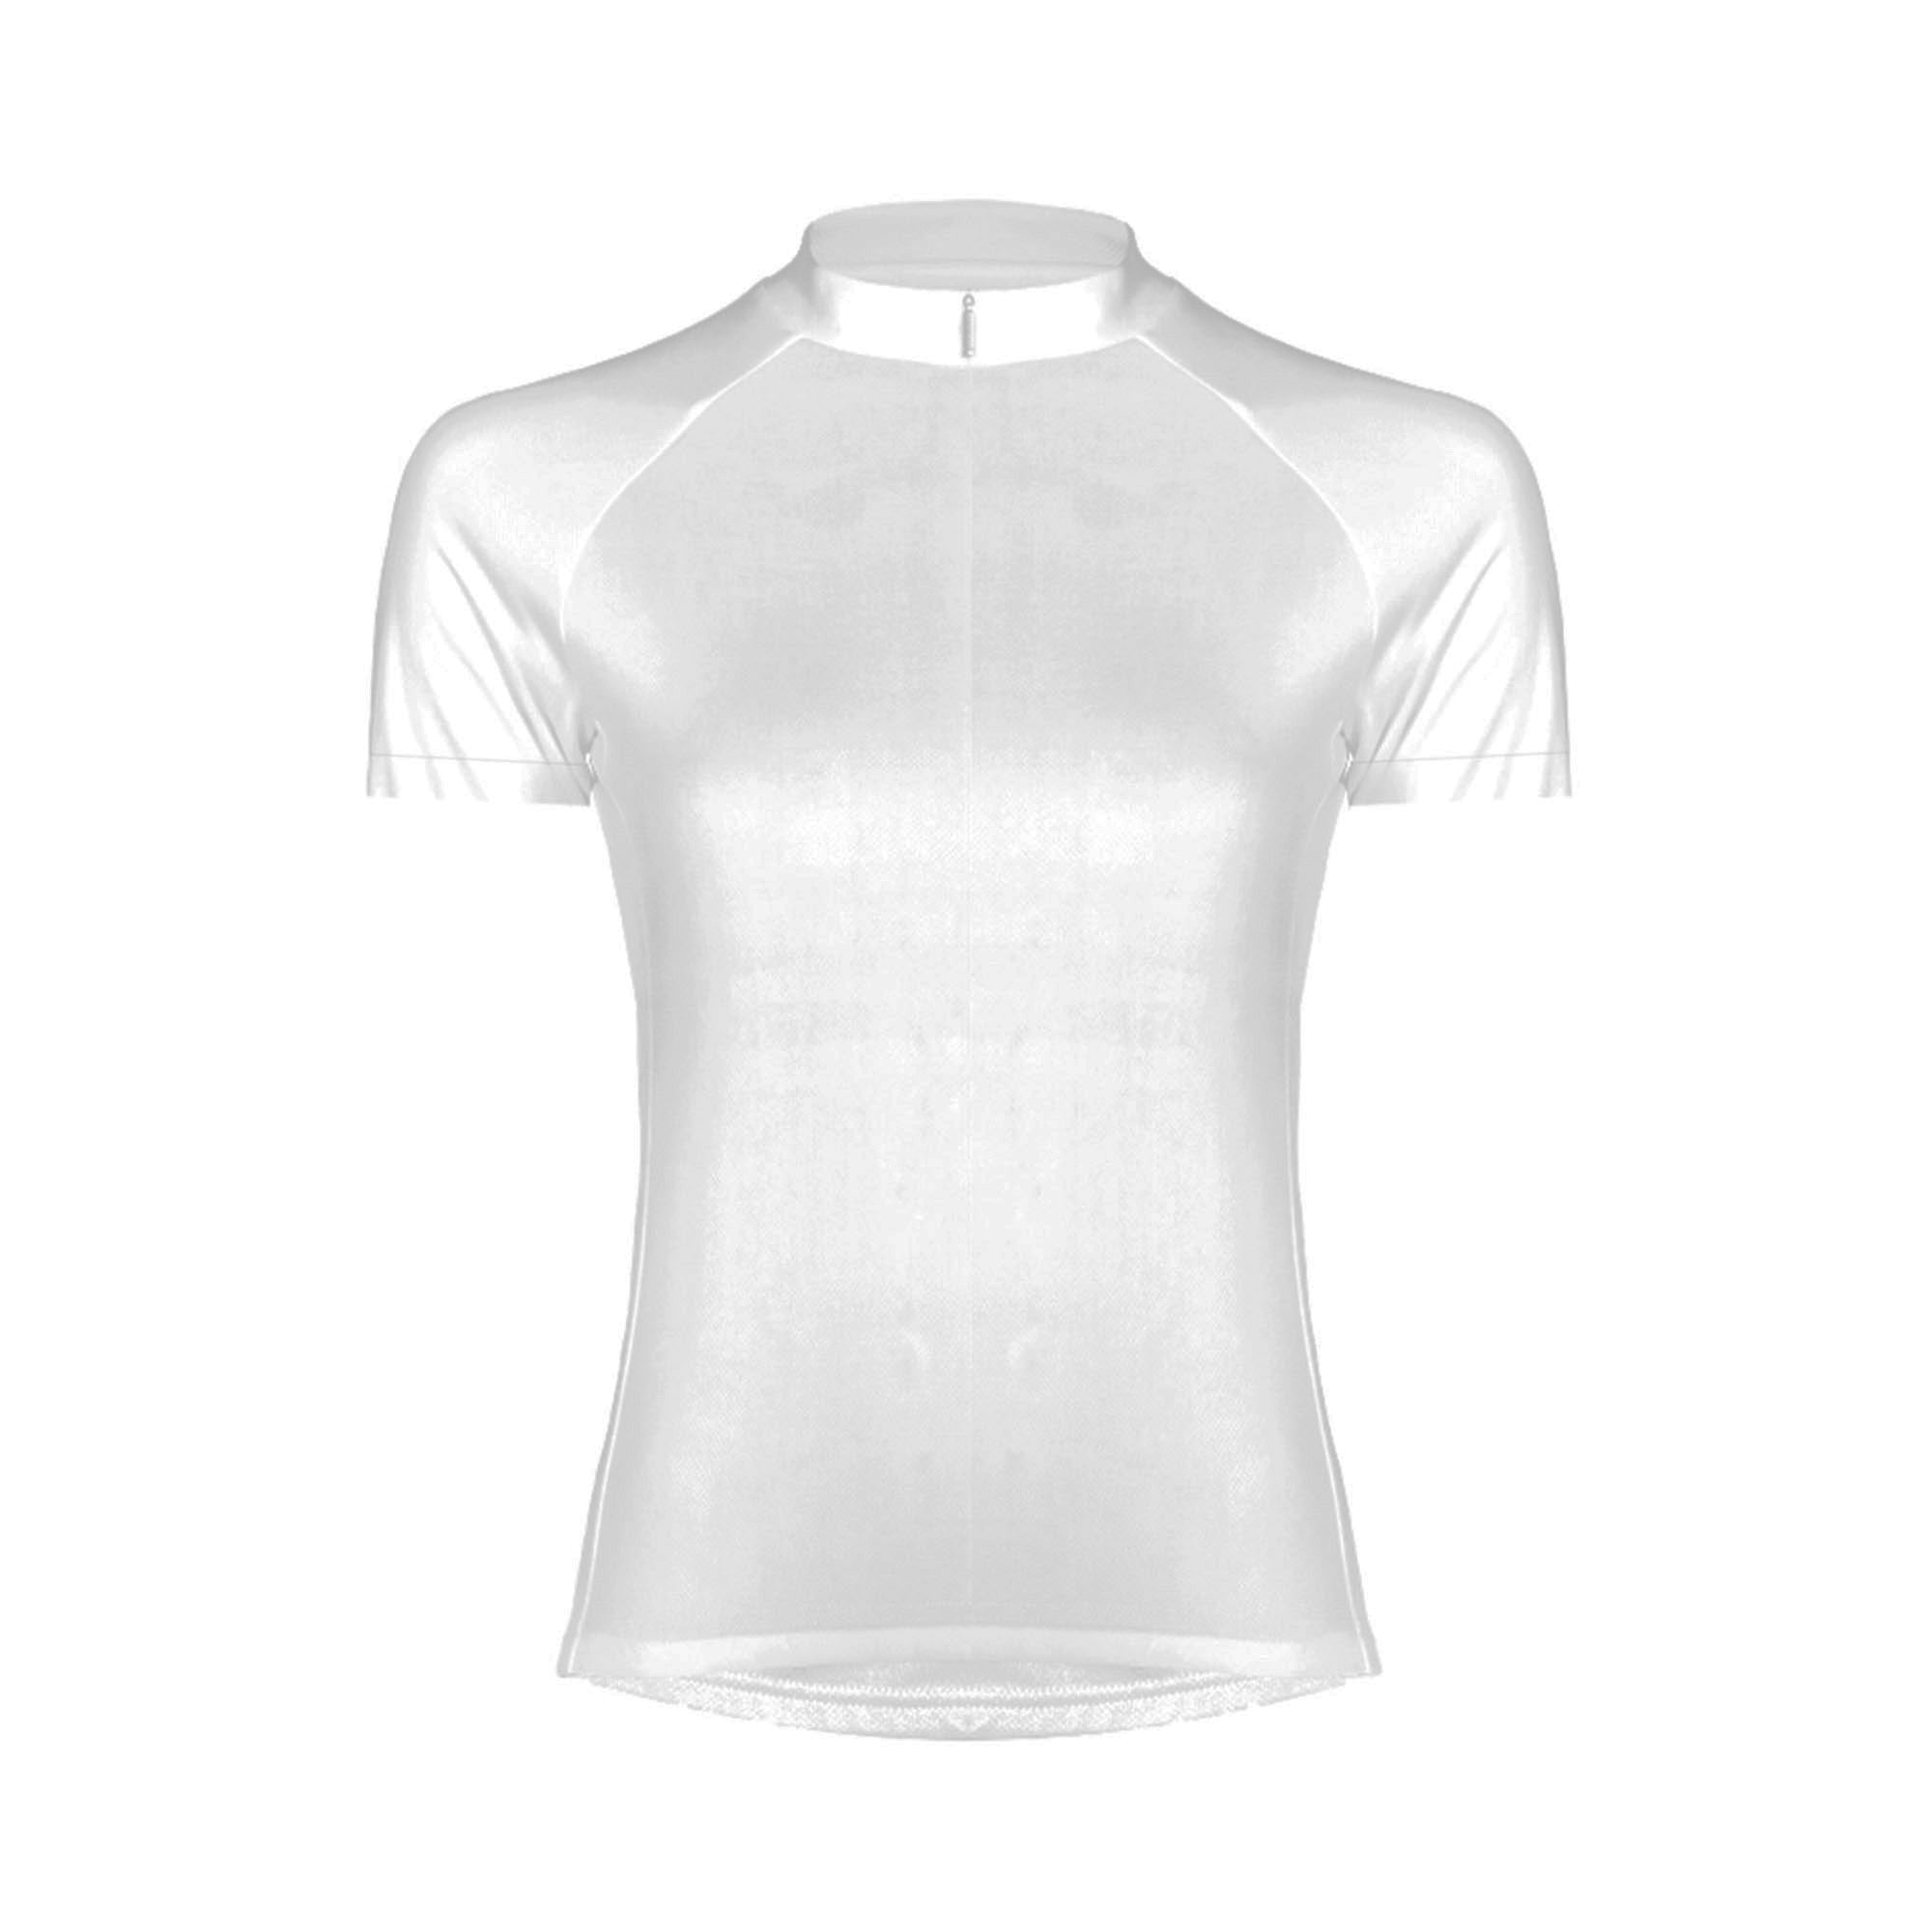 Item 934576 - Primal Wear Full-Zip Short Sleeve Cycling Jersey